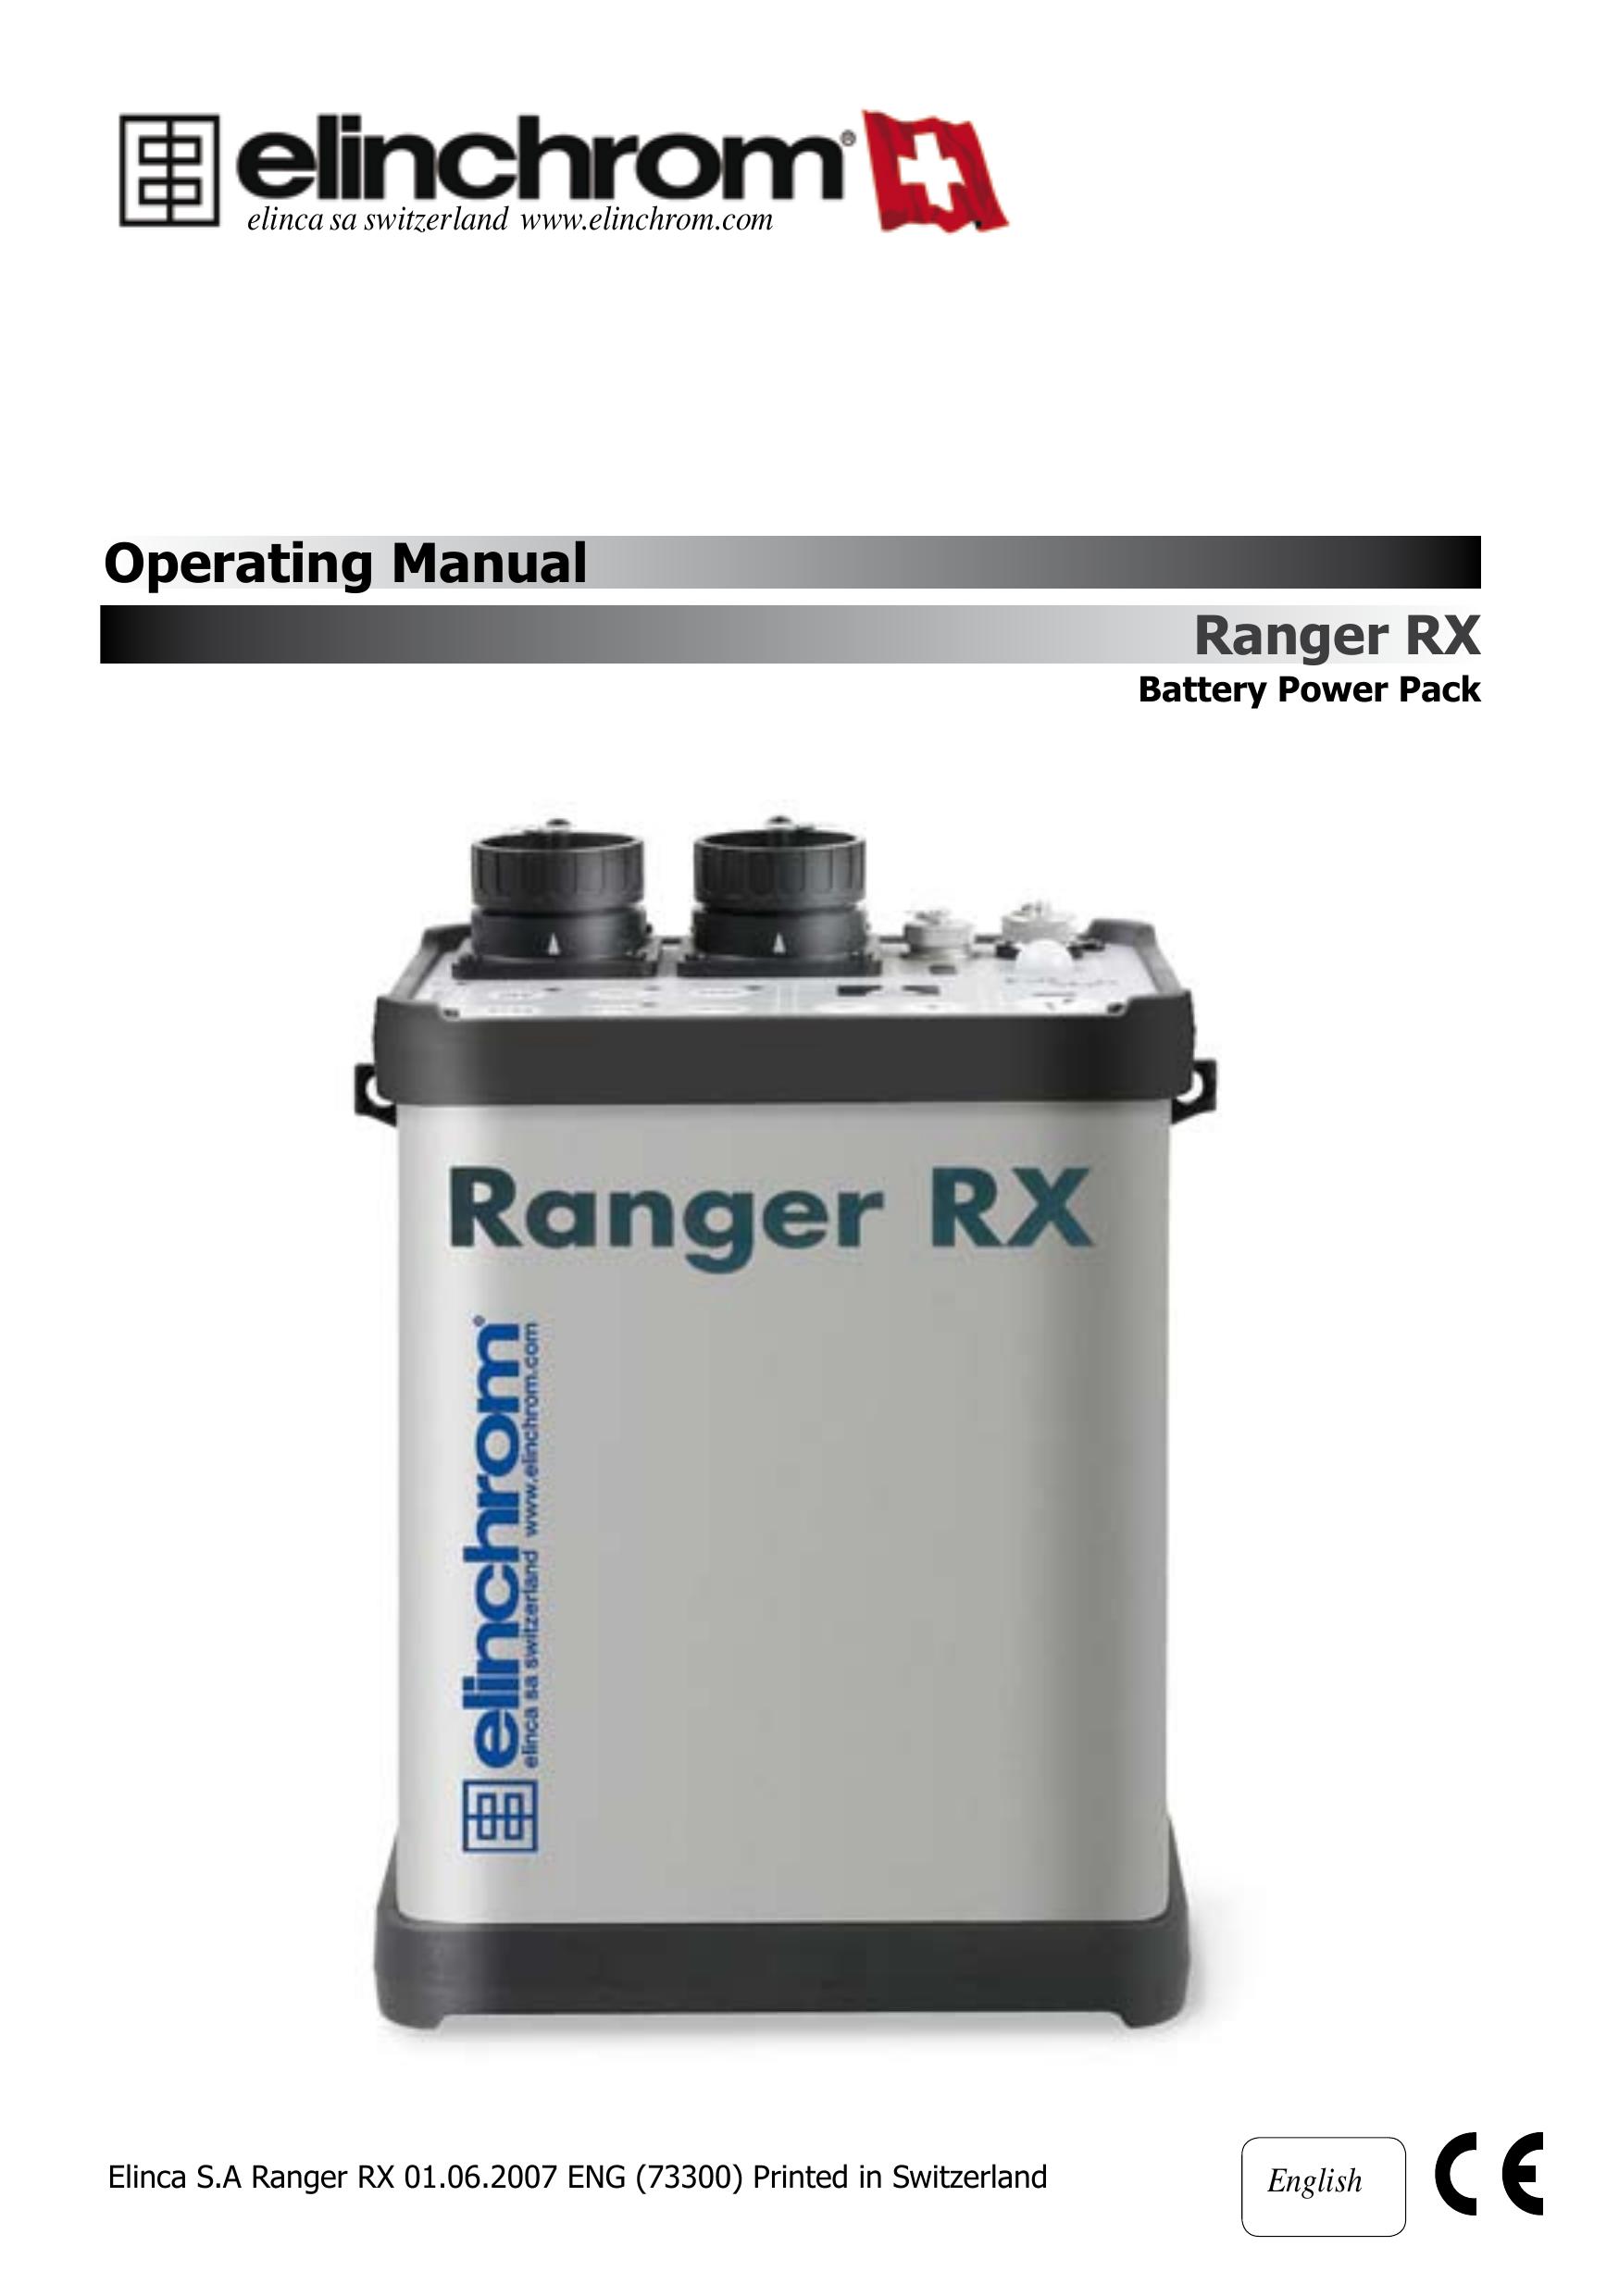 Elinchrom Ranger RX Marine Battery User Manual